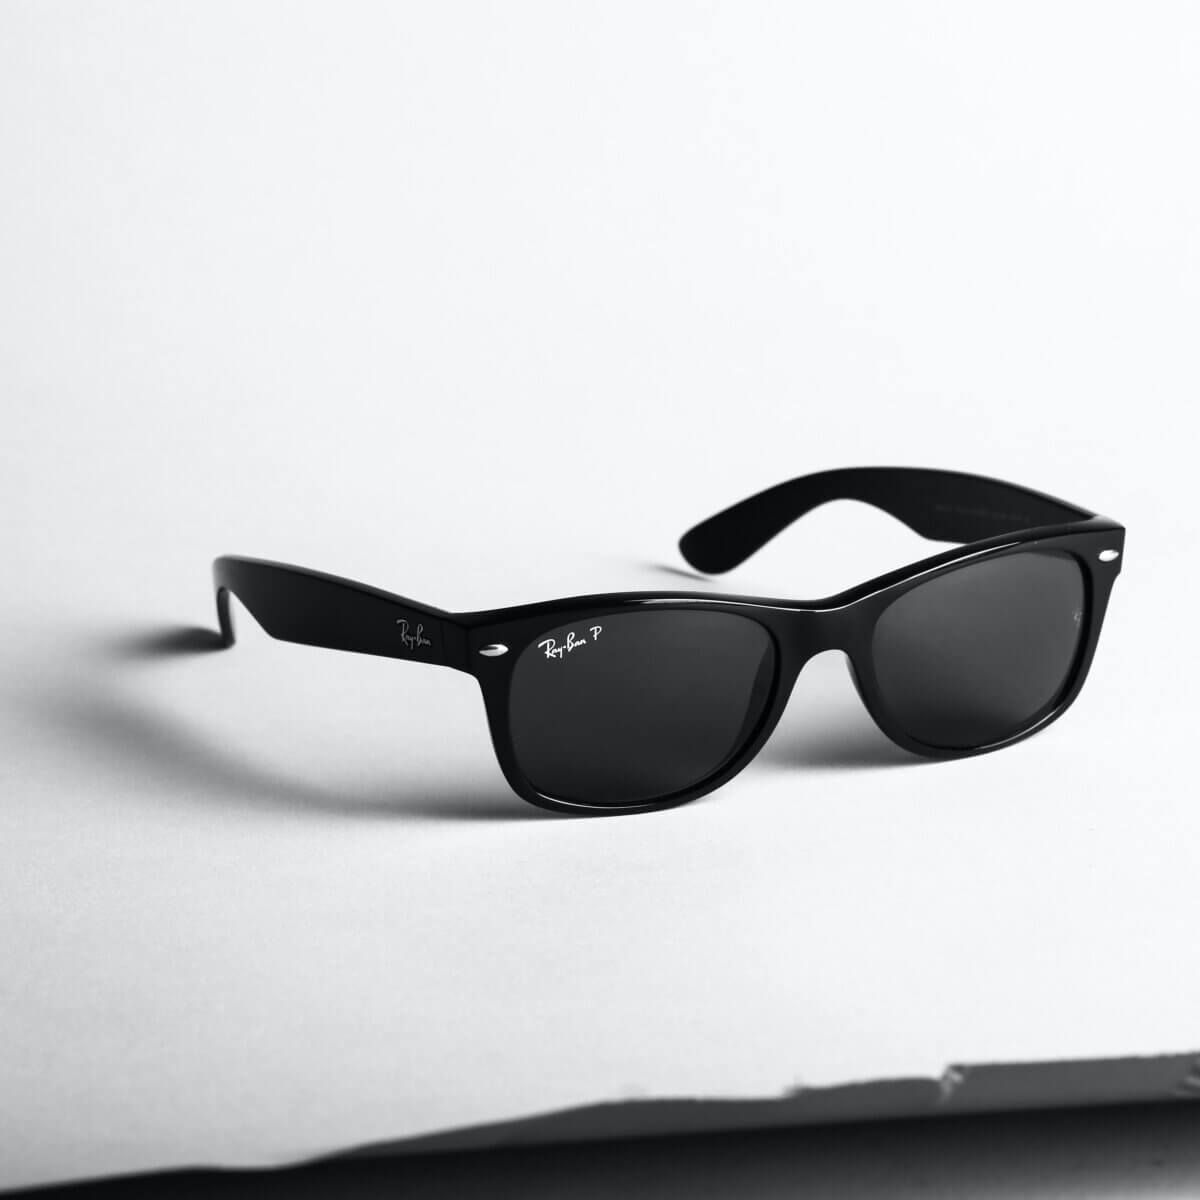 Ray-Ban Wayfarer Sunglasses.